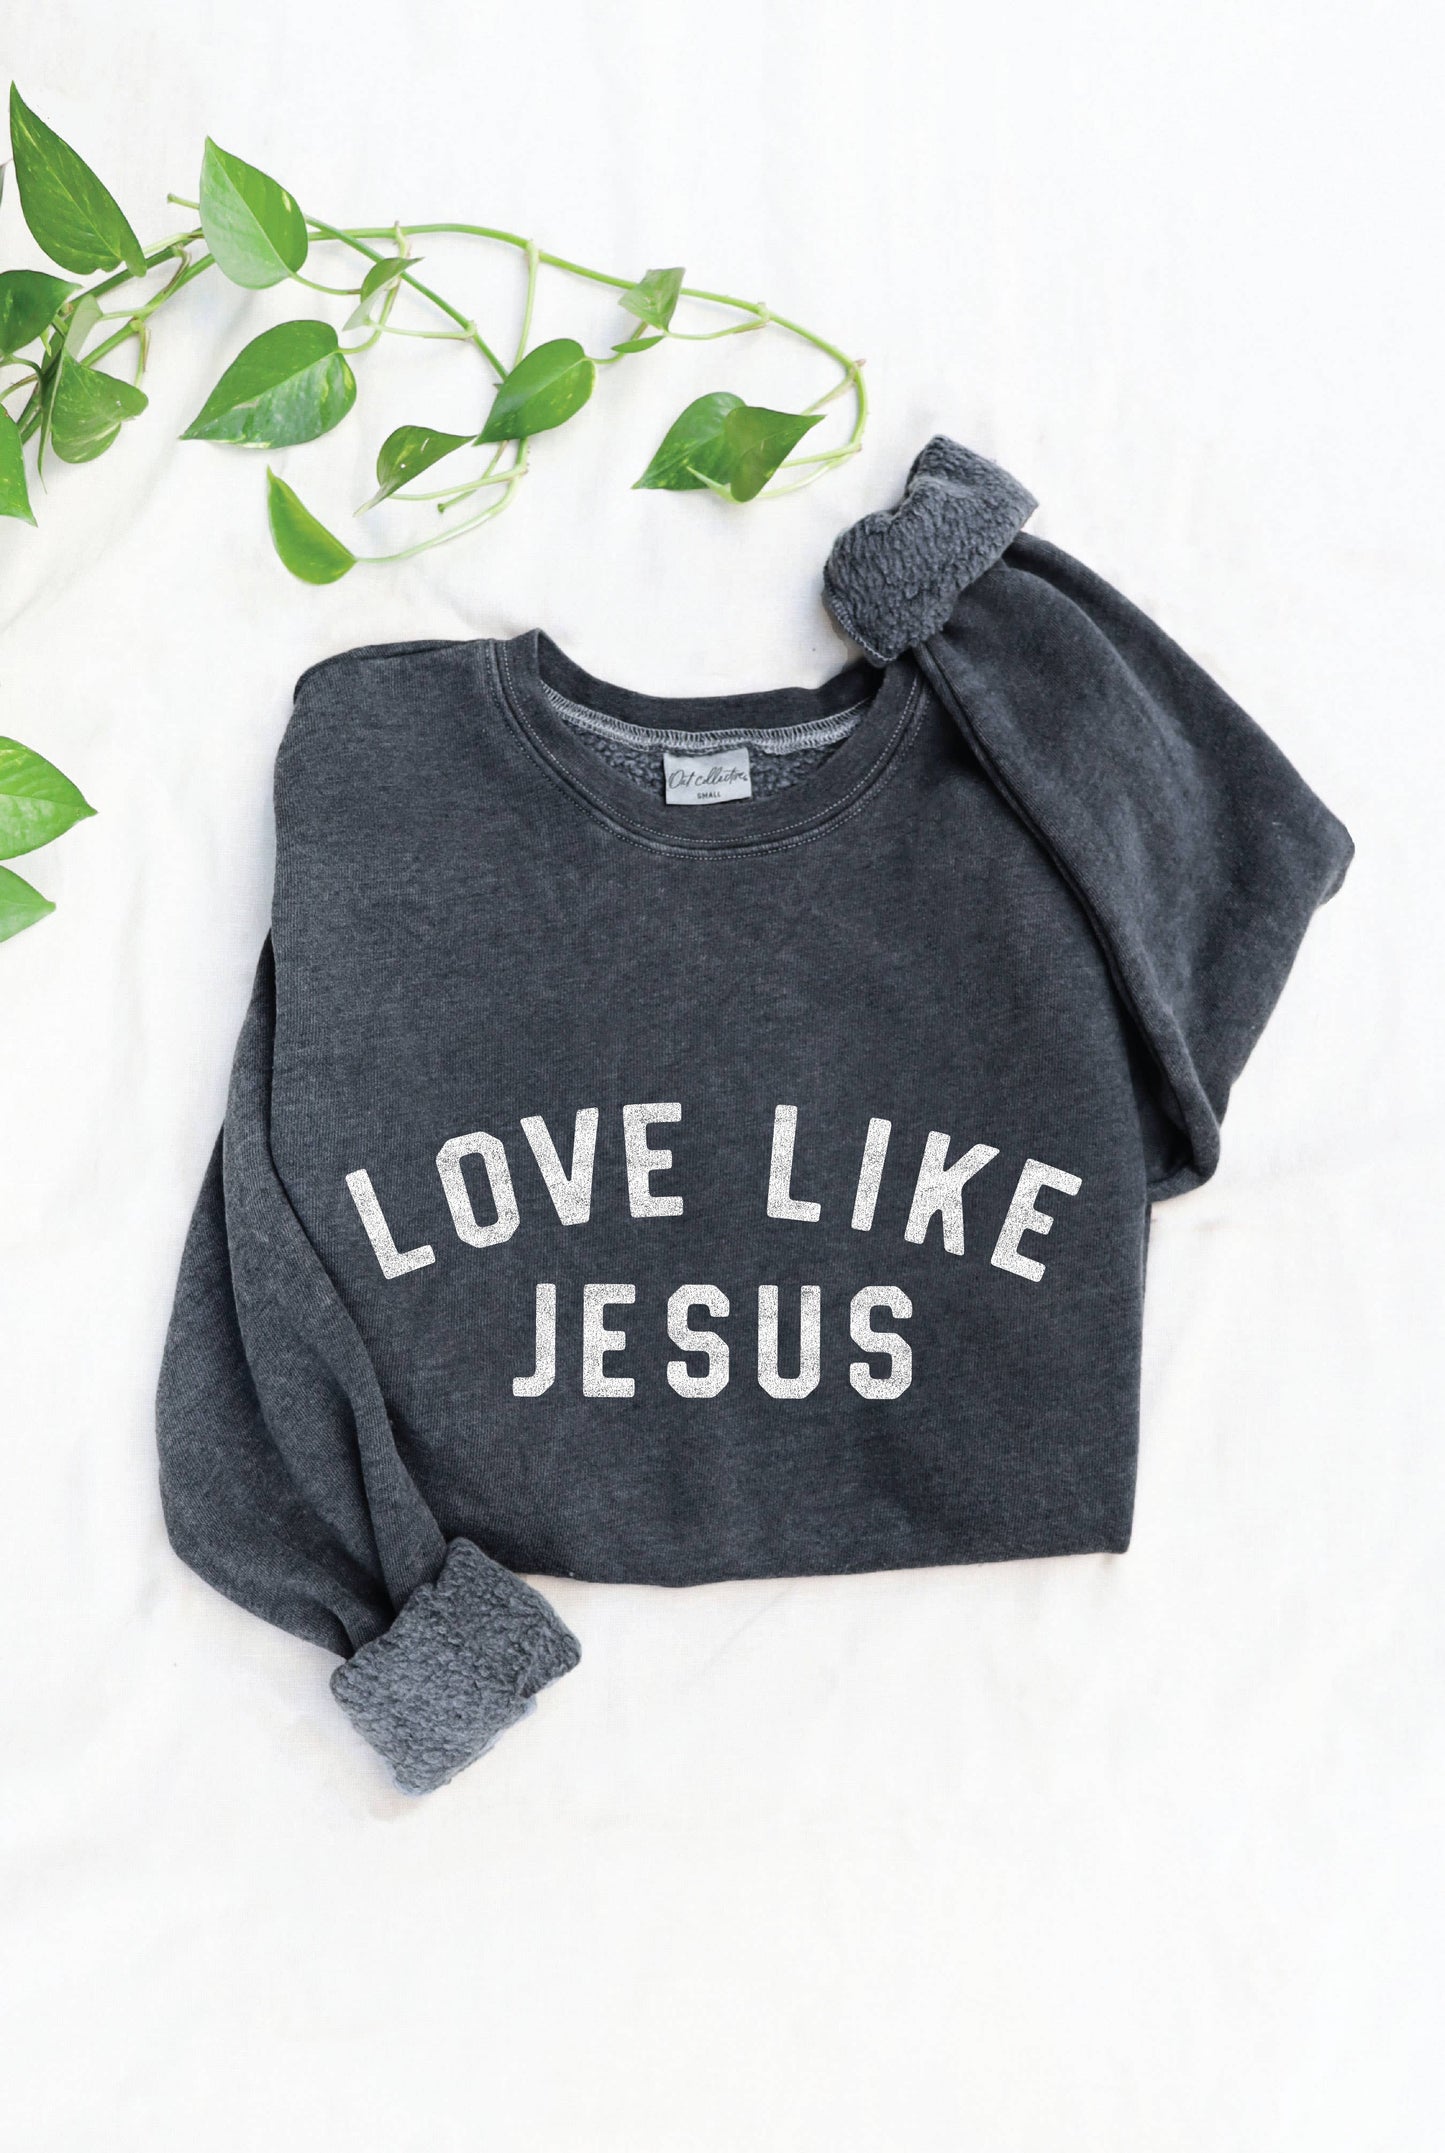 LOVE LIKE JESUS Mineral Graphic Sweatshirt: S / DUSTY FOREST